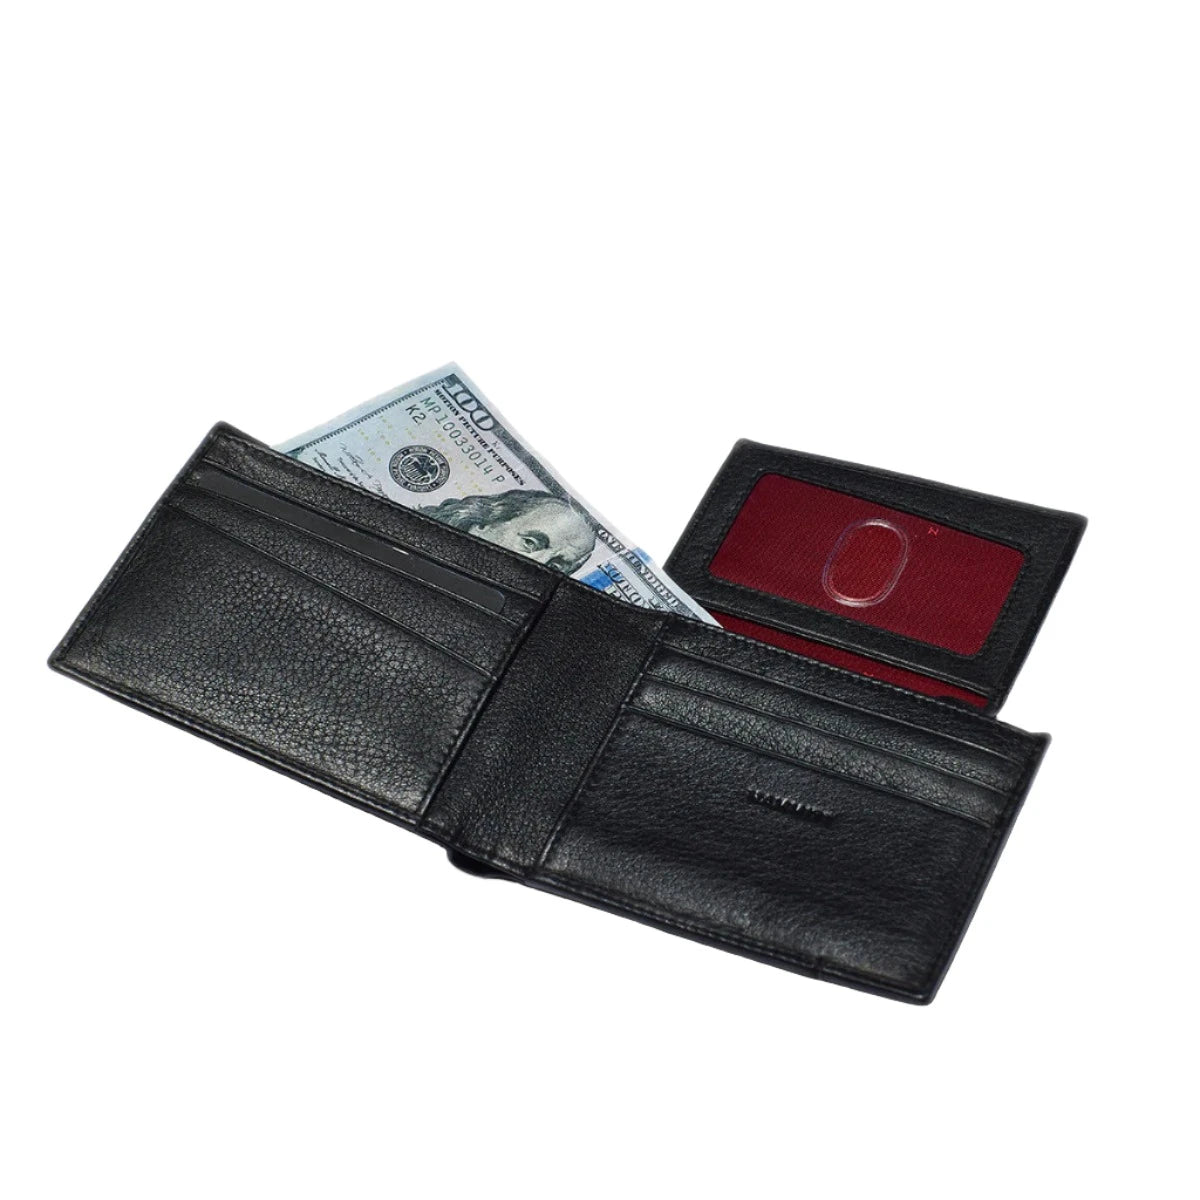 BALBOA Bifold Wallet in Black